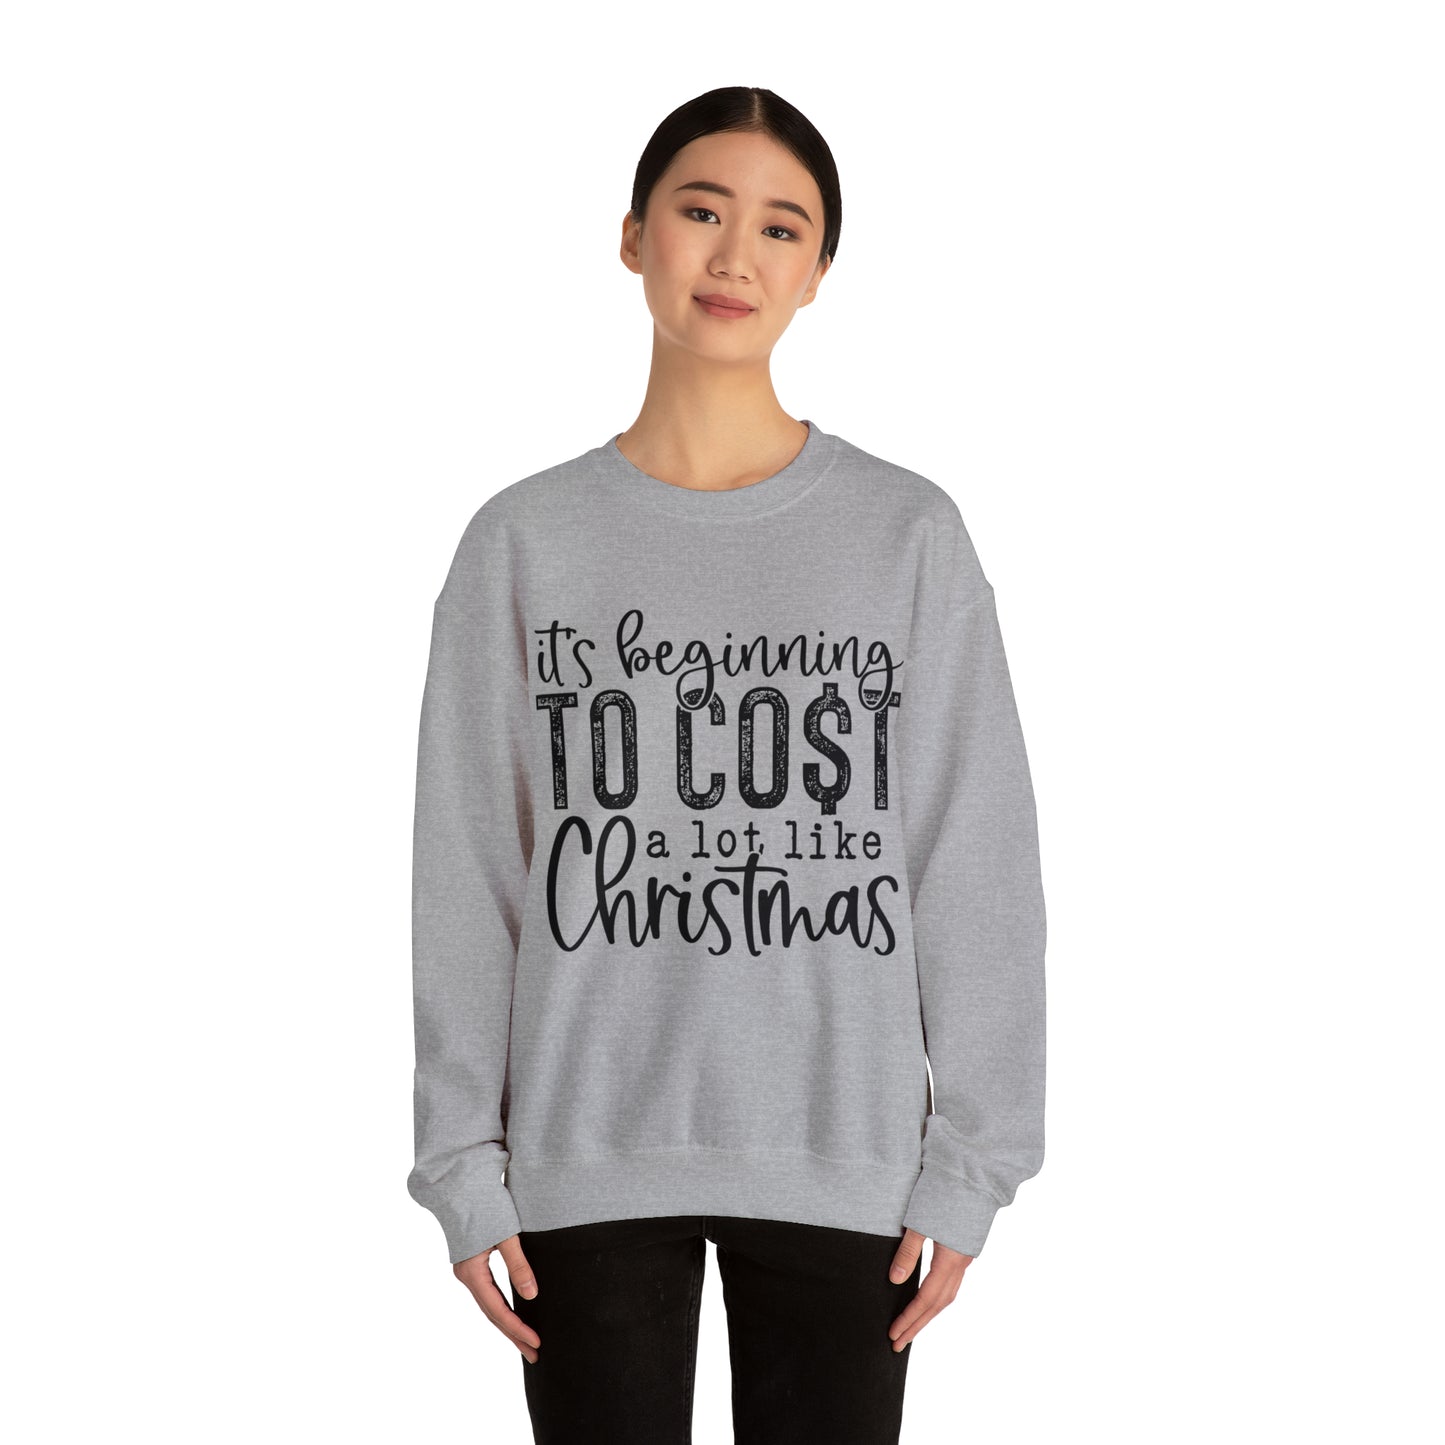 It's Beginning to Cost a Lot Like Christmas Women's Christmas Crewneck Sweatshirt with Black